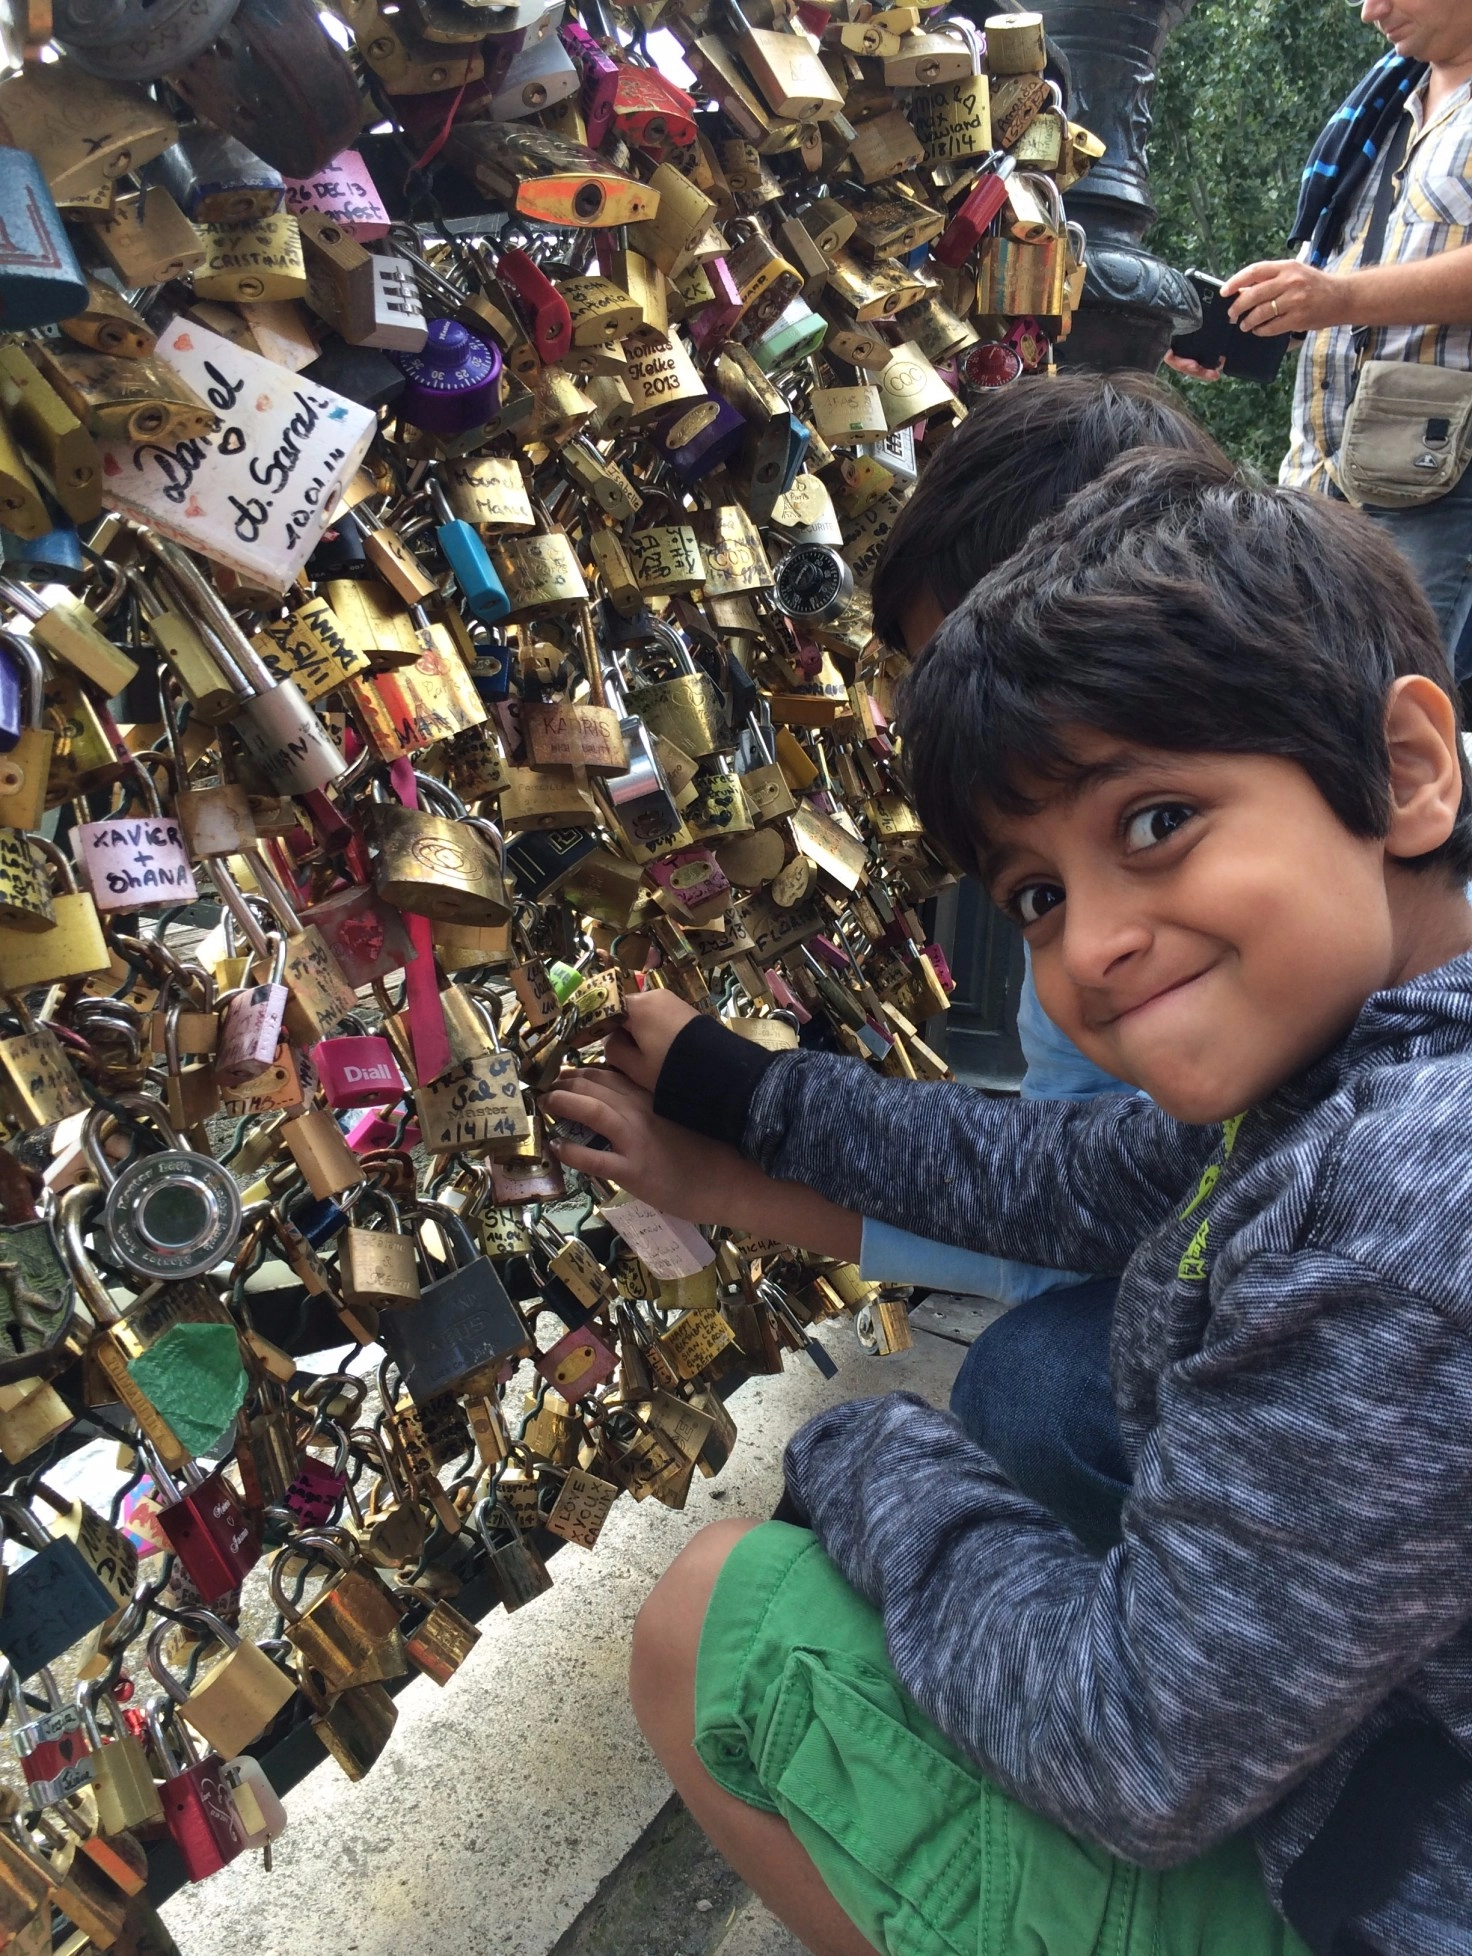 Child at the "love locks" tourist attraction in Paris